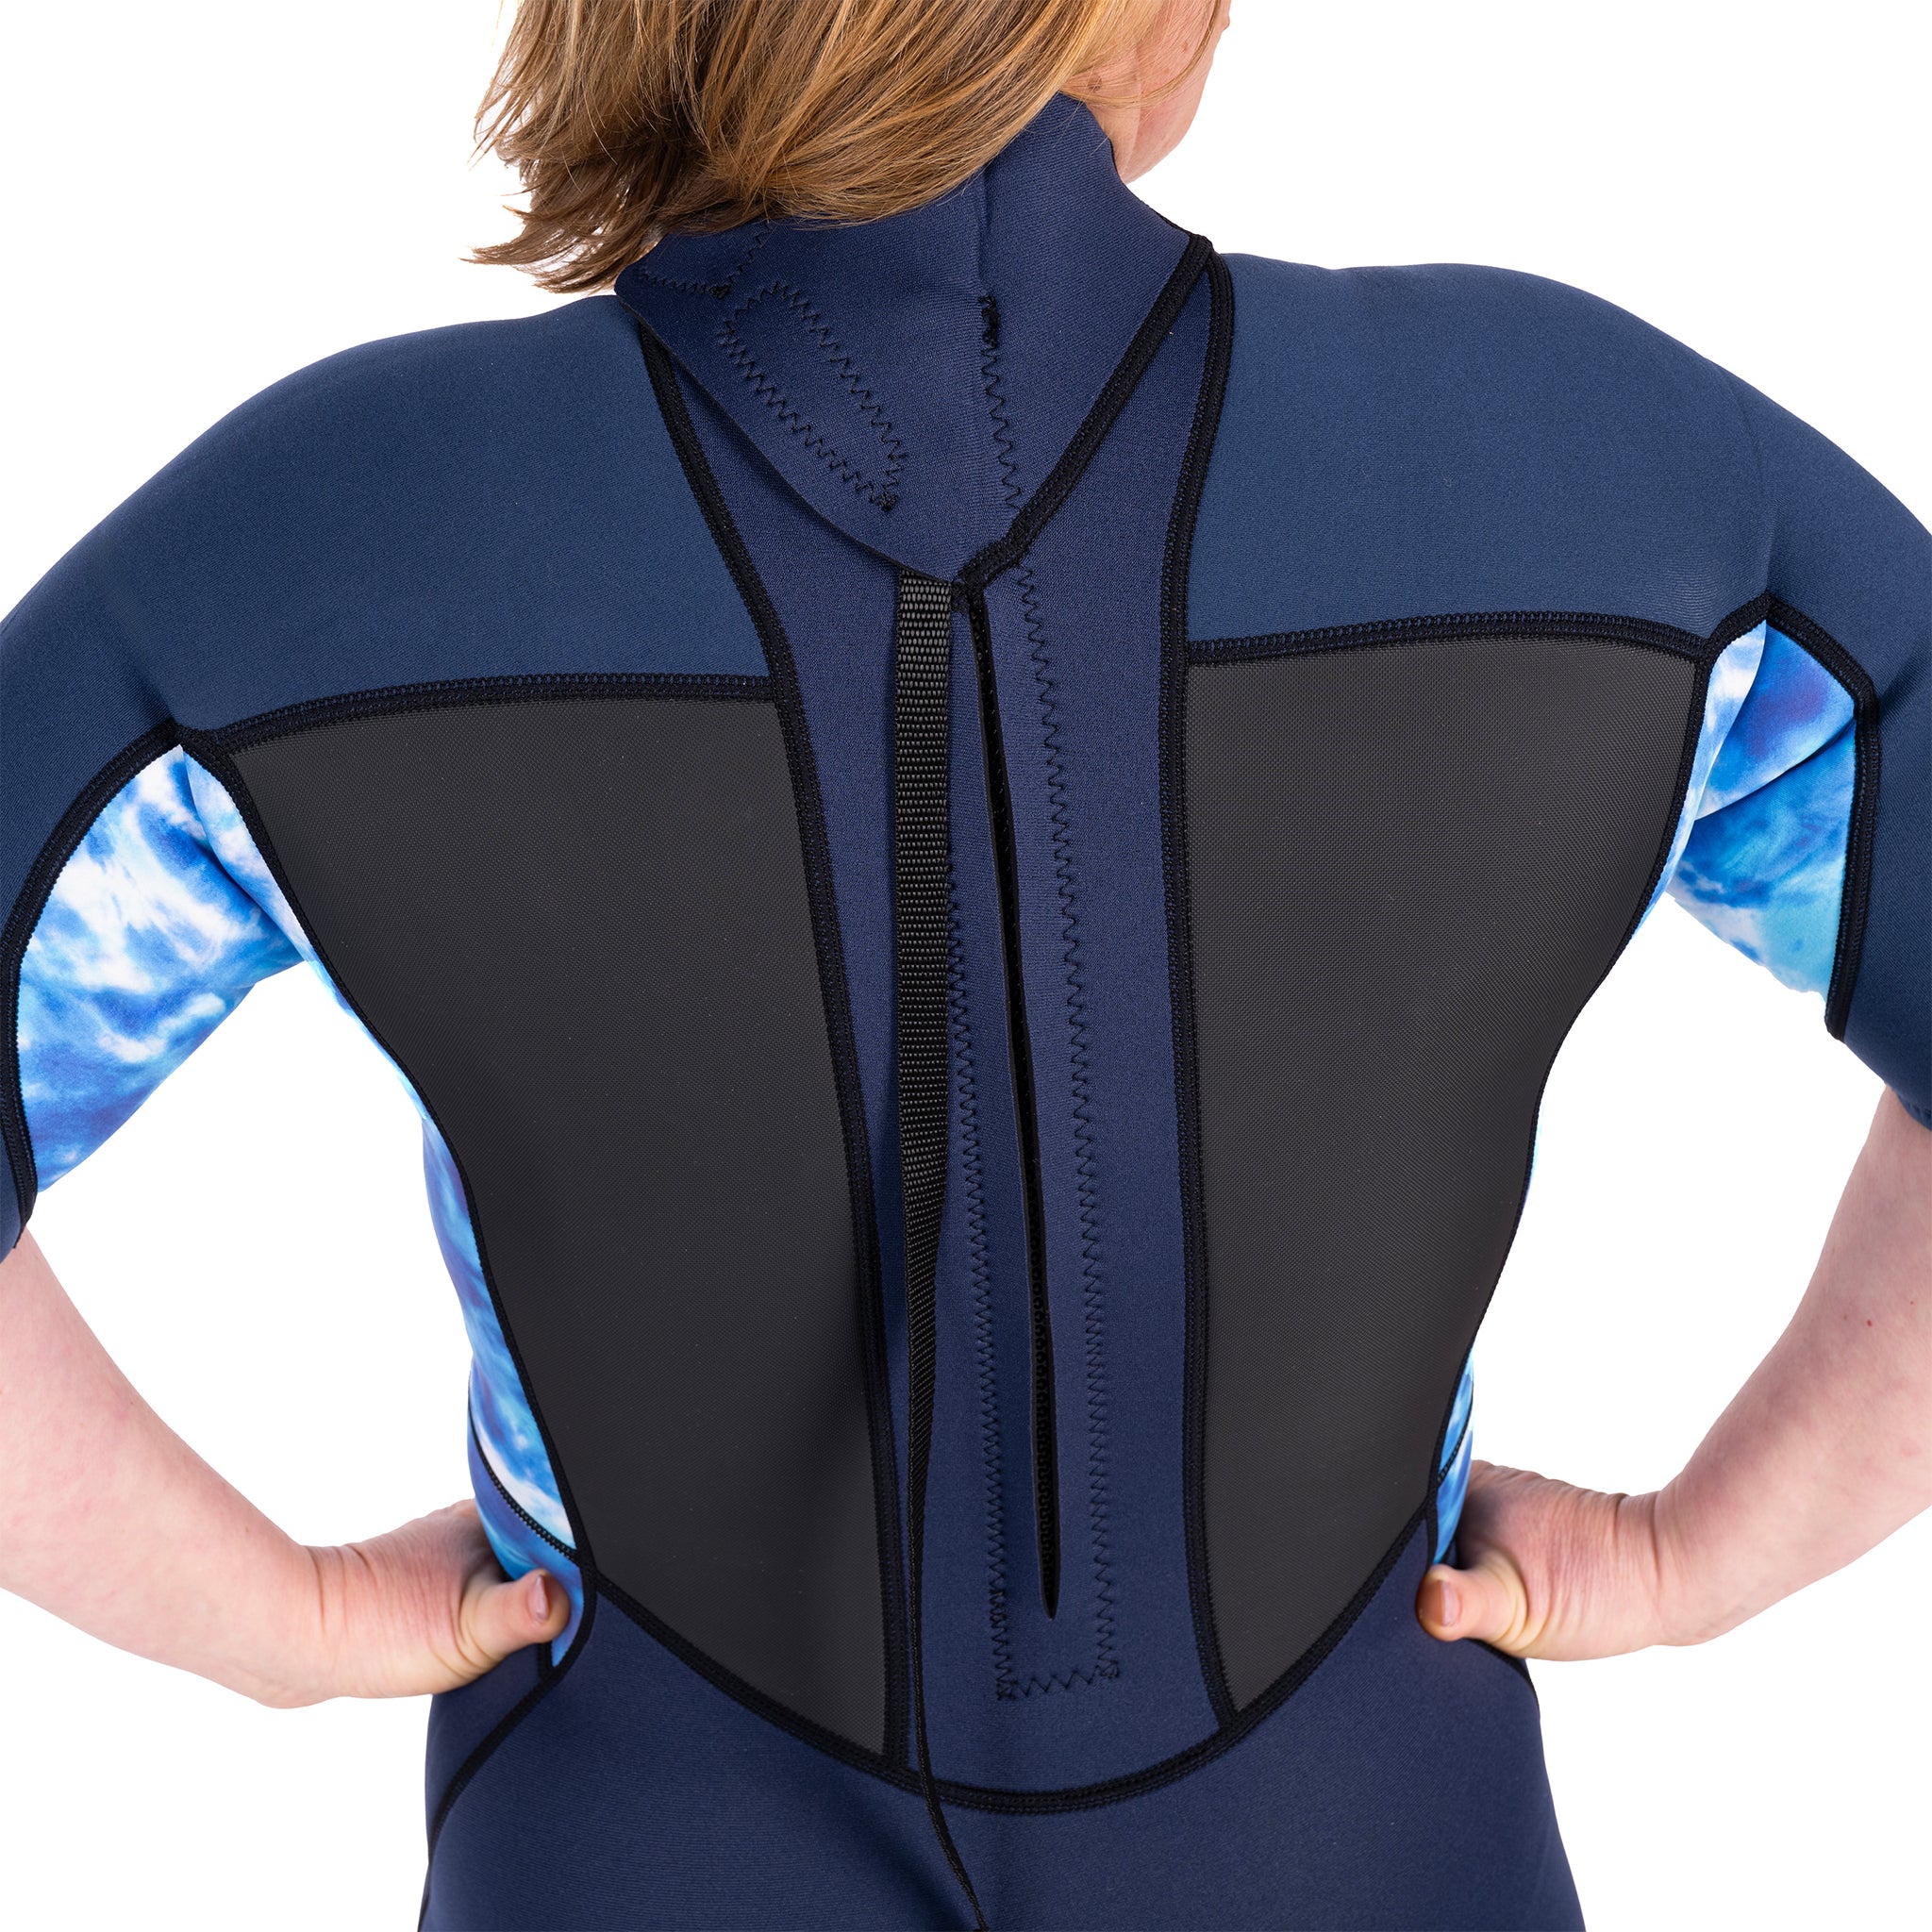 Reefwear Elise 3/2mm Women's Shortie Wetsuit | Back Mesh panels and flatlock stitch detail